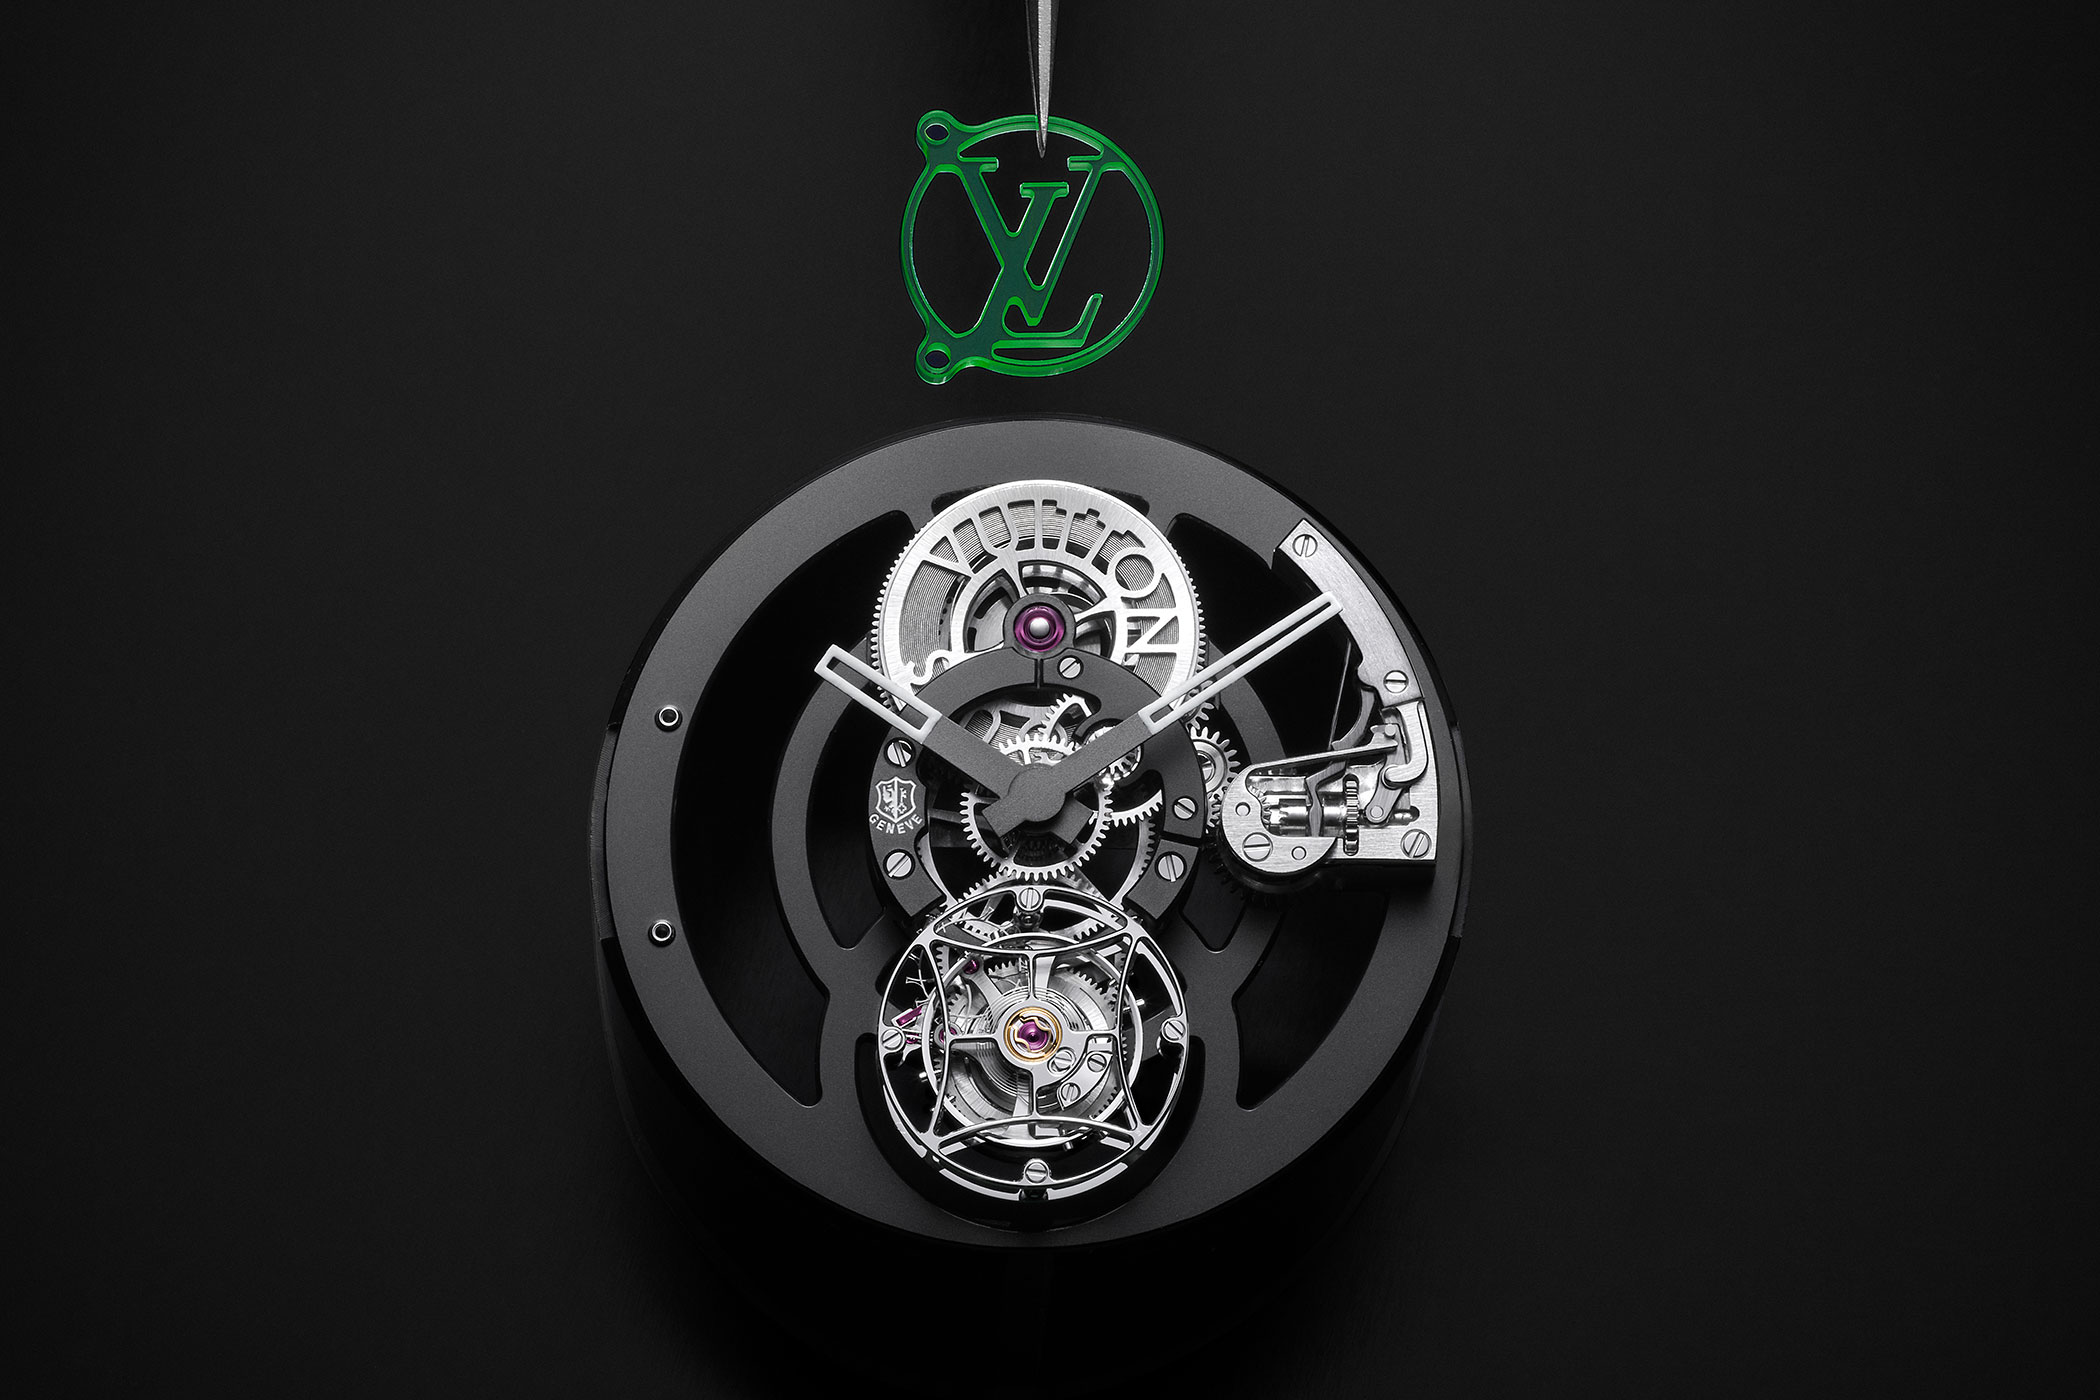 Hands-On: Louis Vuitton Tambour Fiery Heart Automata Watch